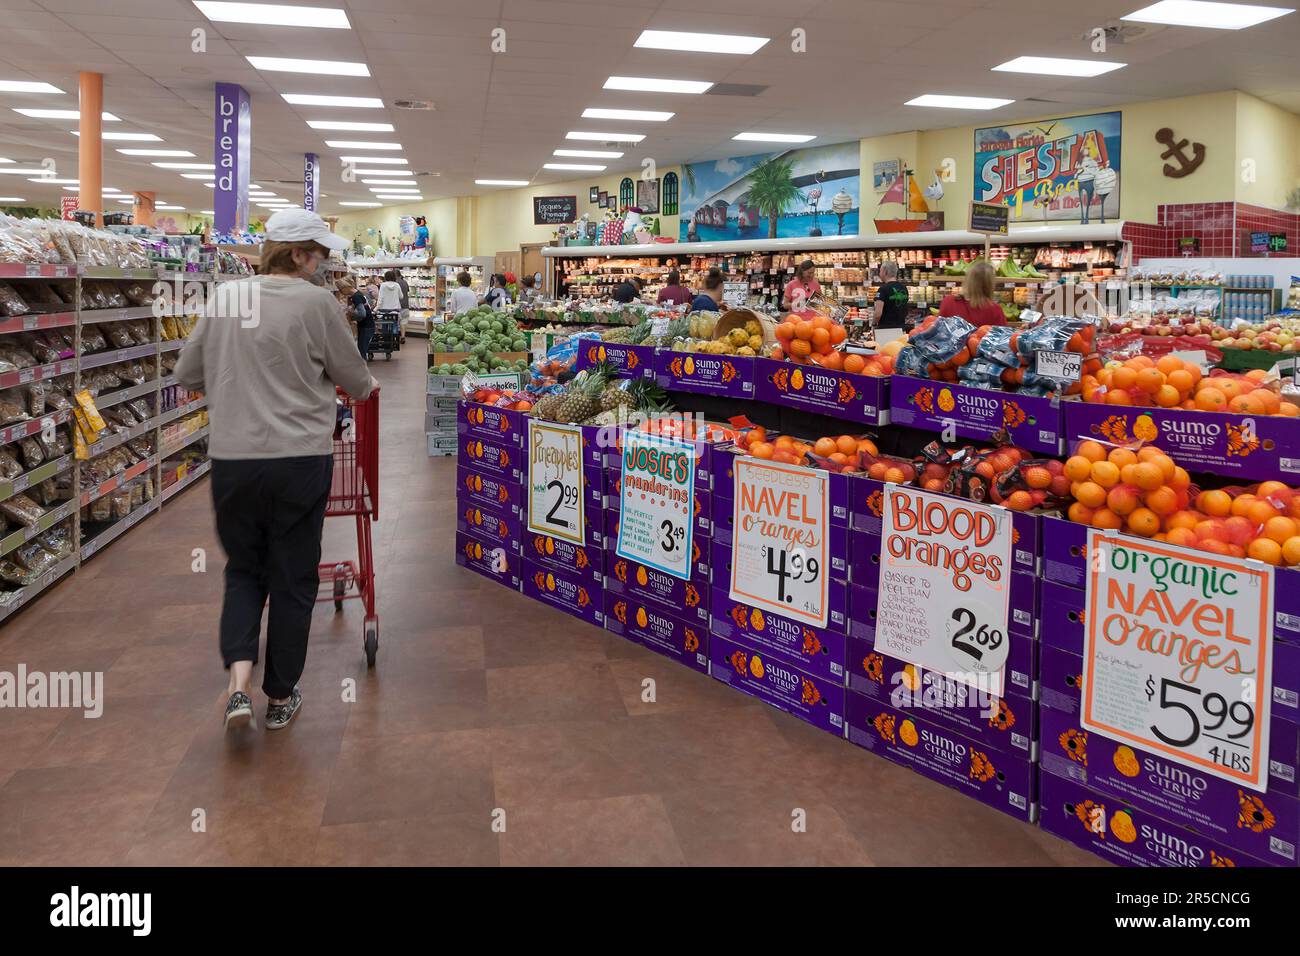 Trader Joe's grocery store/food market's fruit aisle in Sarasota, Florida, United States Stock Photo